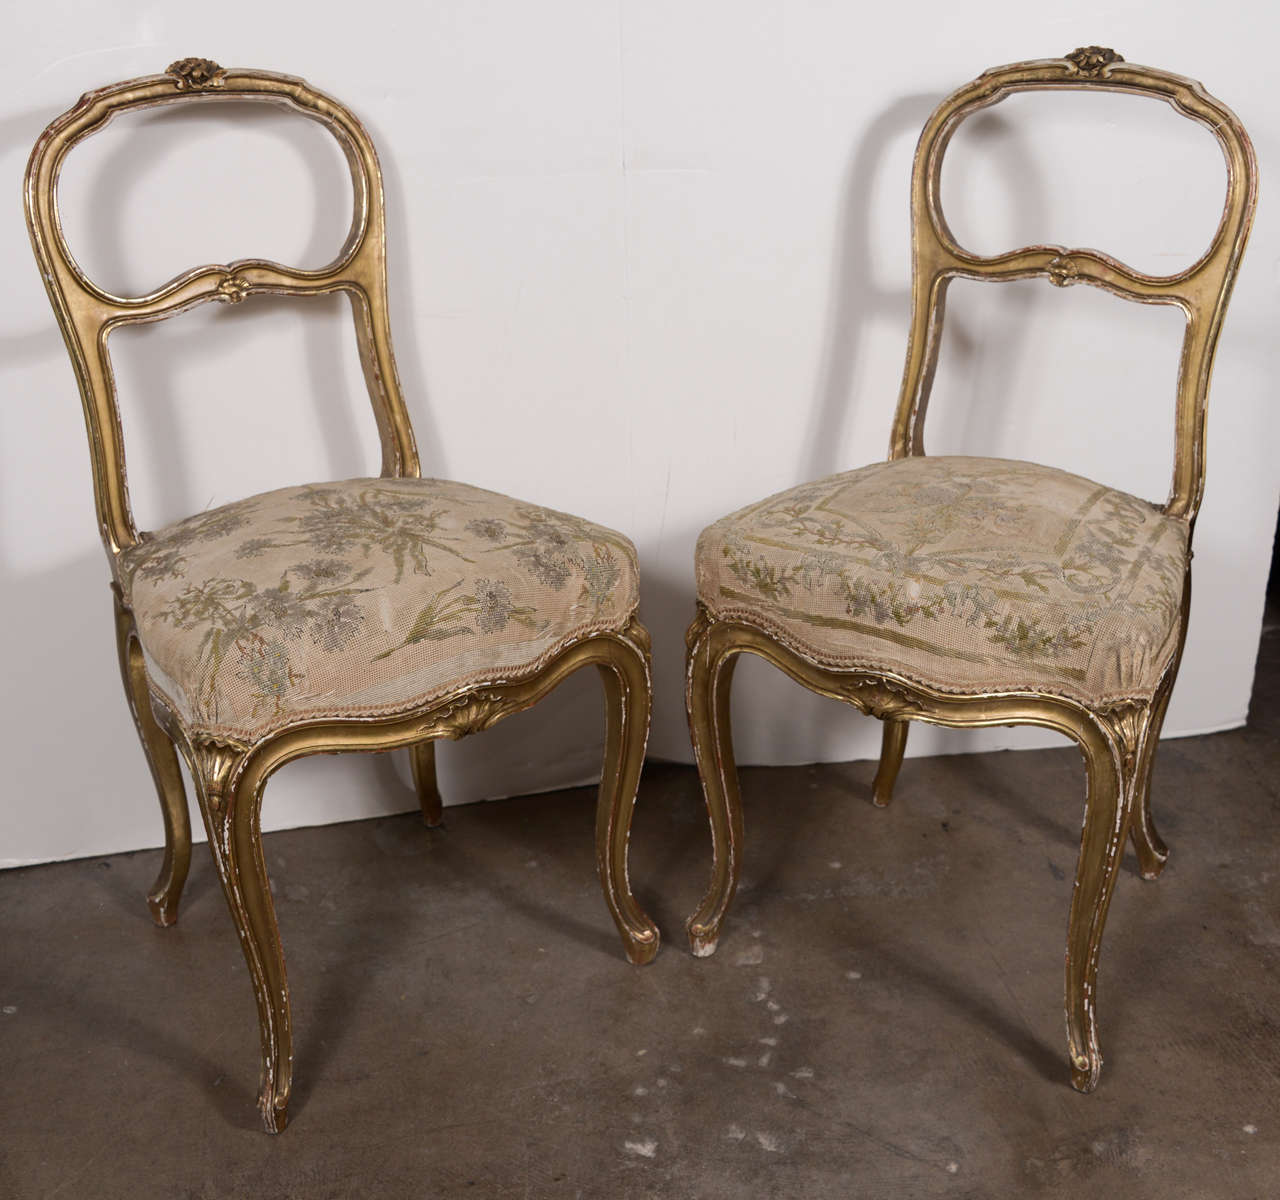 Pair of 18th century gilt ladies' chairs.